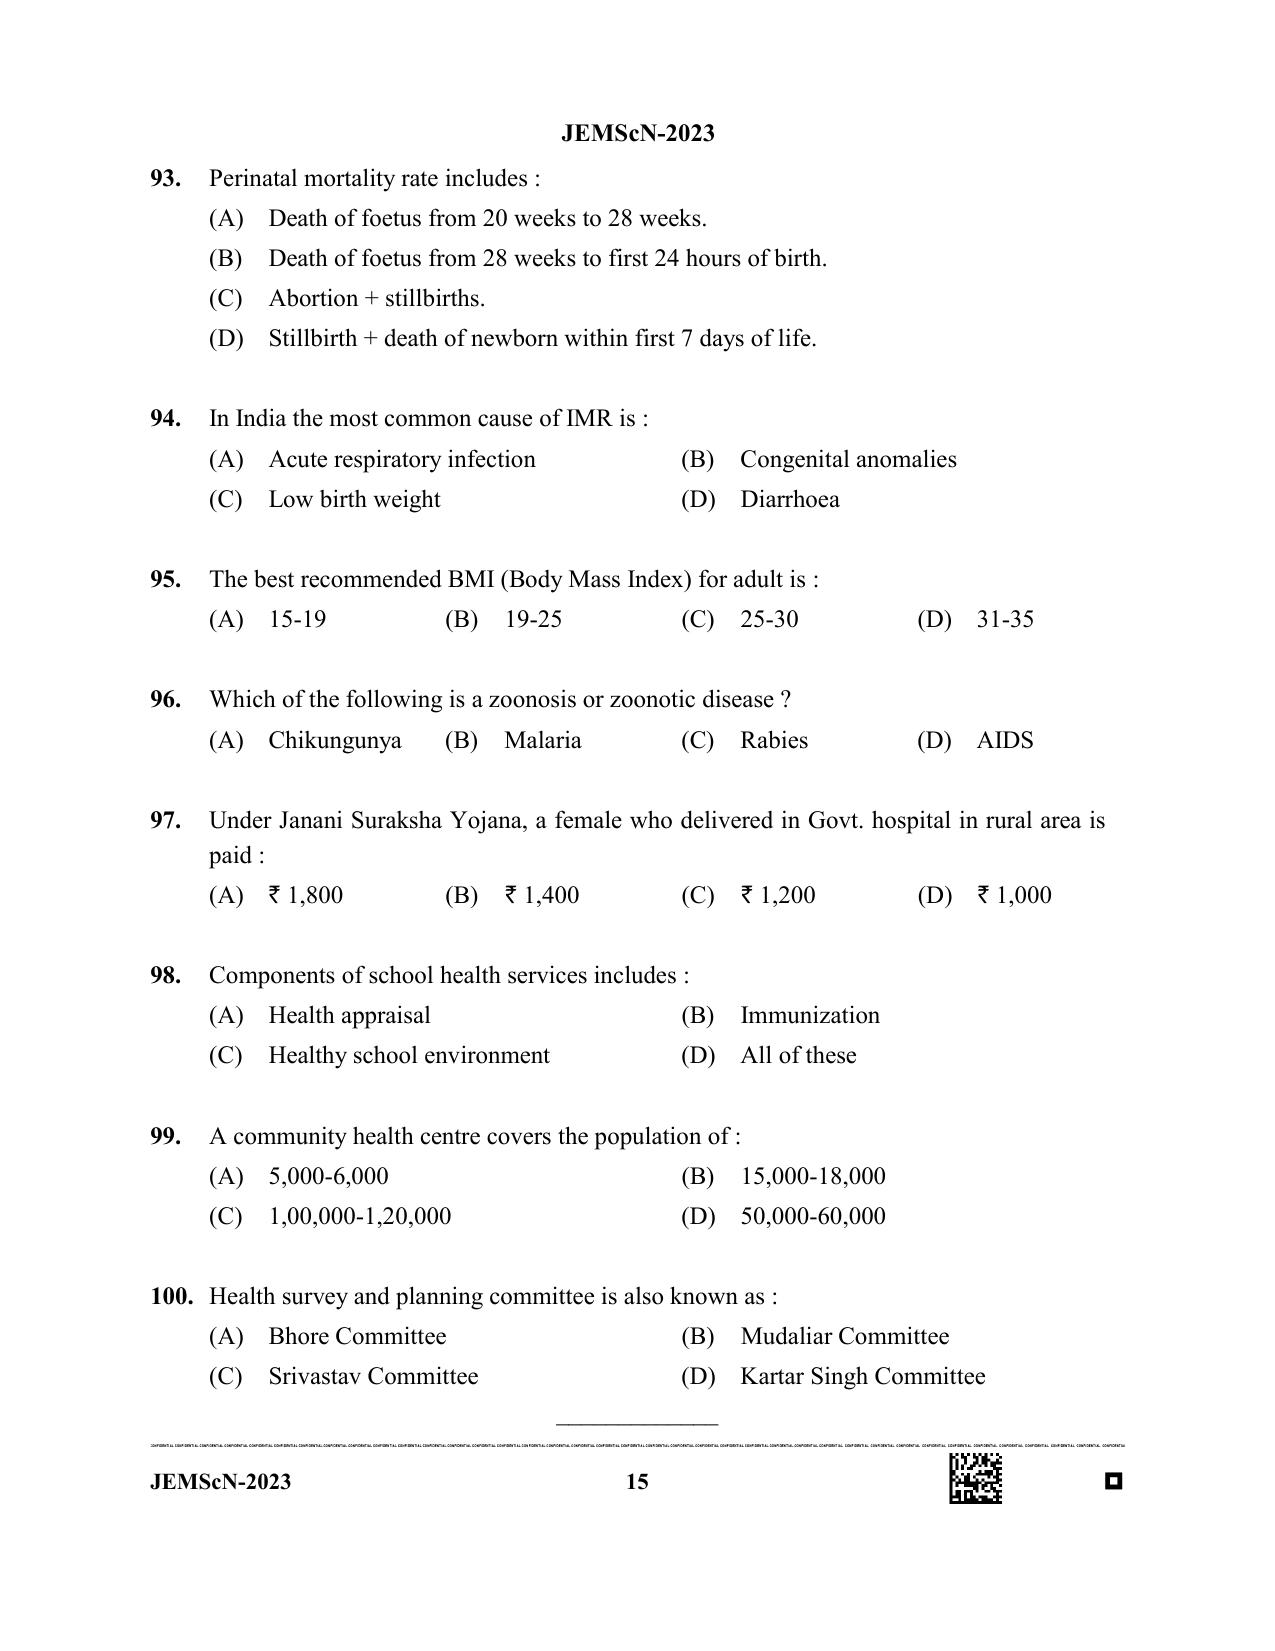 WB JEMScN 2023 Question Paper - Page 15